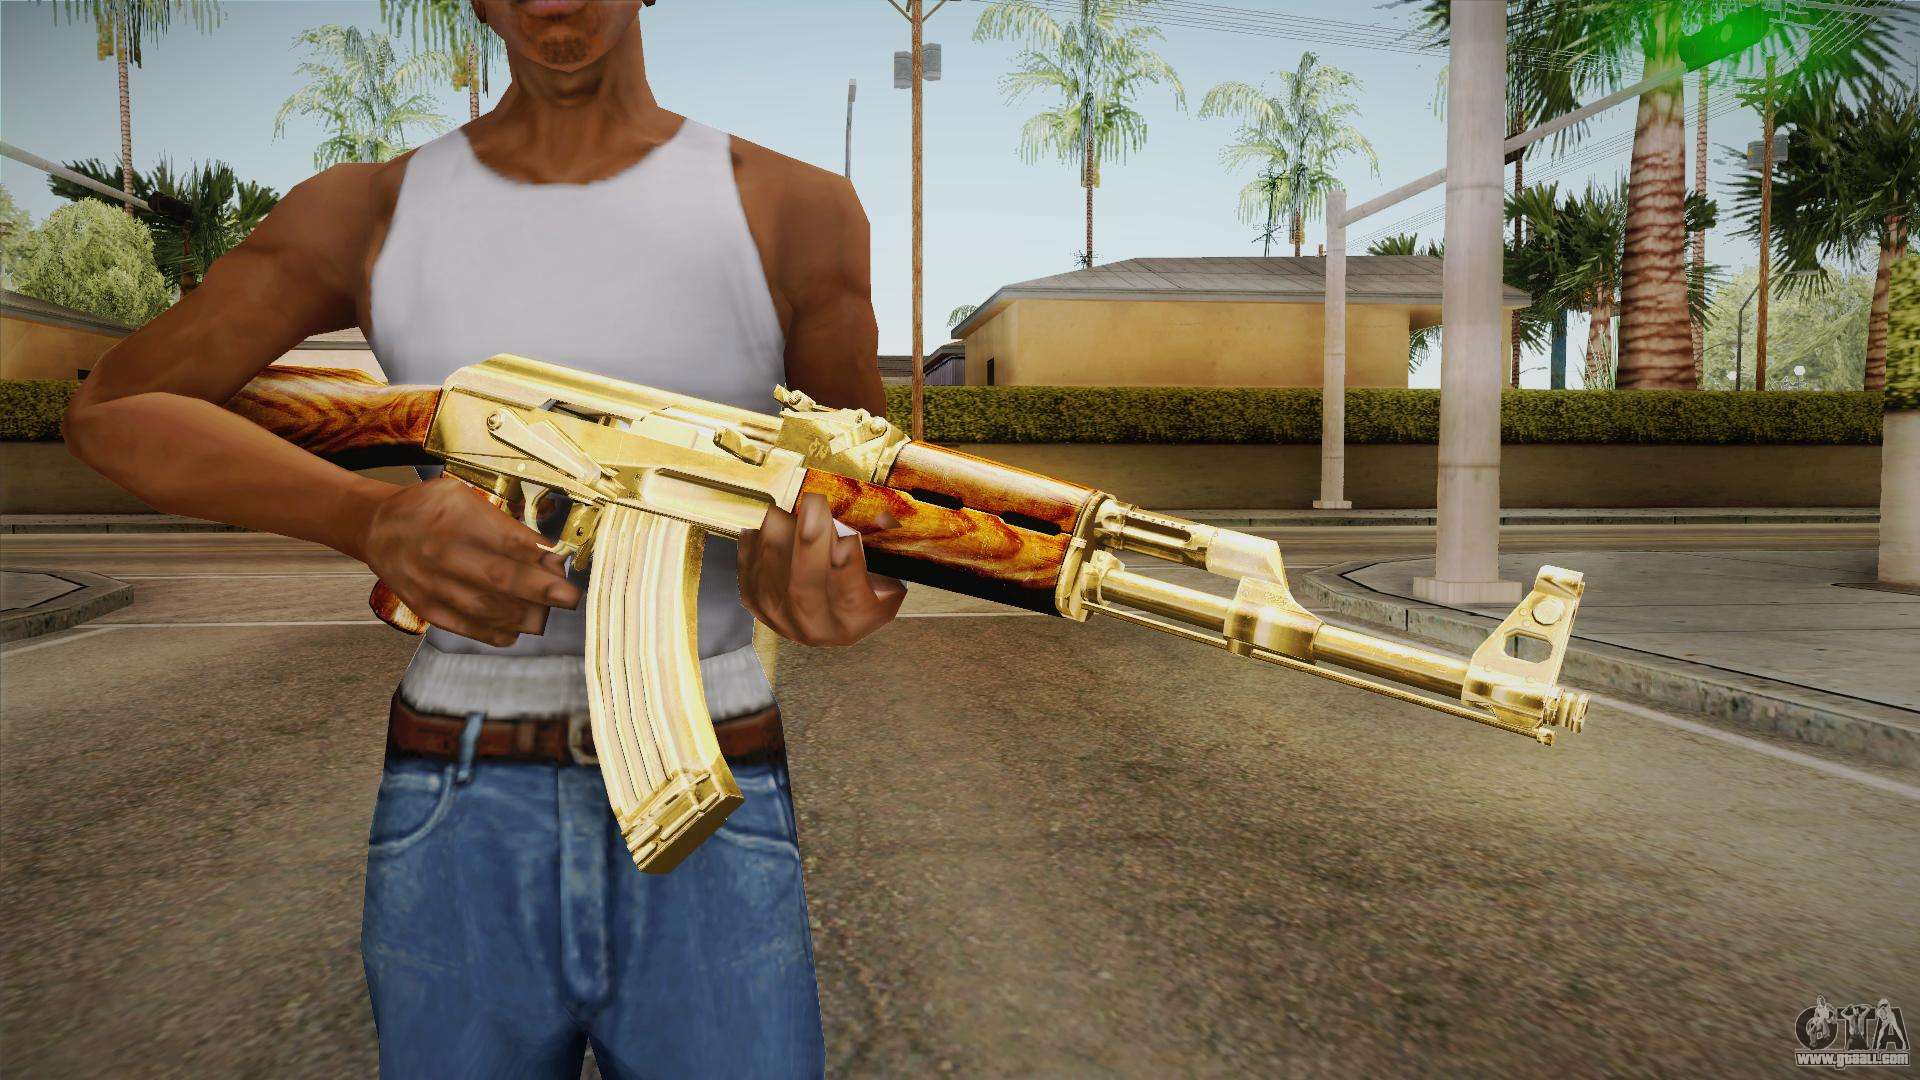 AK-47 Gold for GTA San Andreas